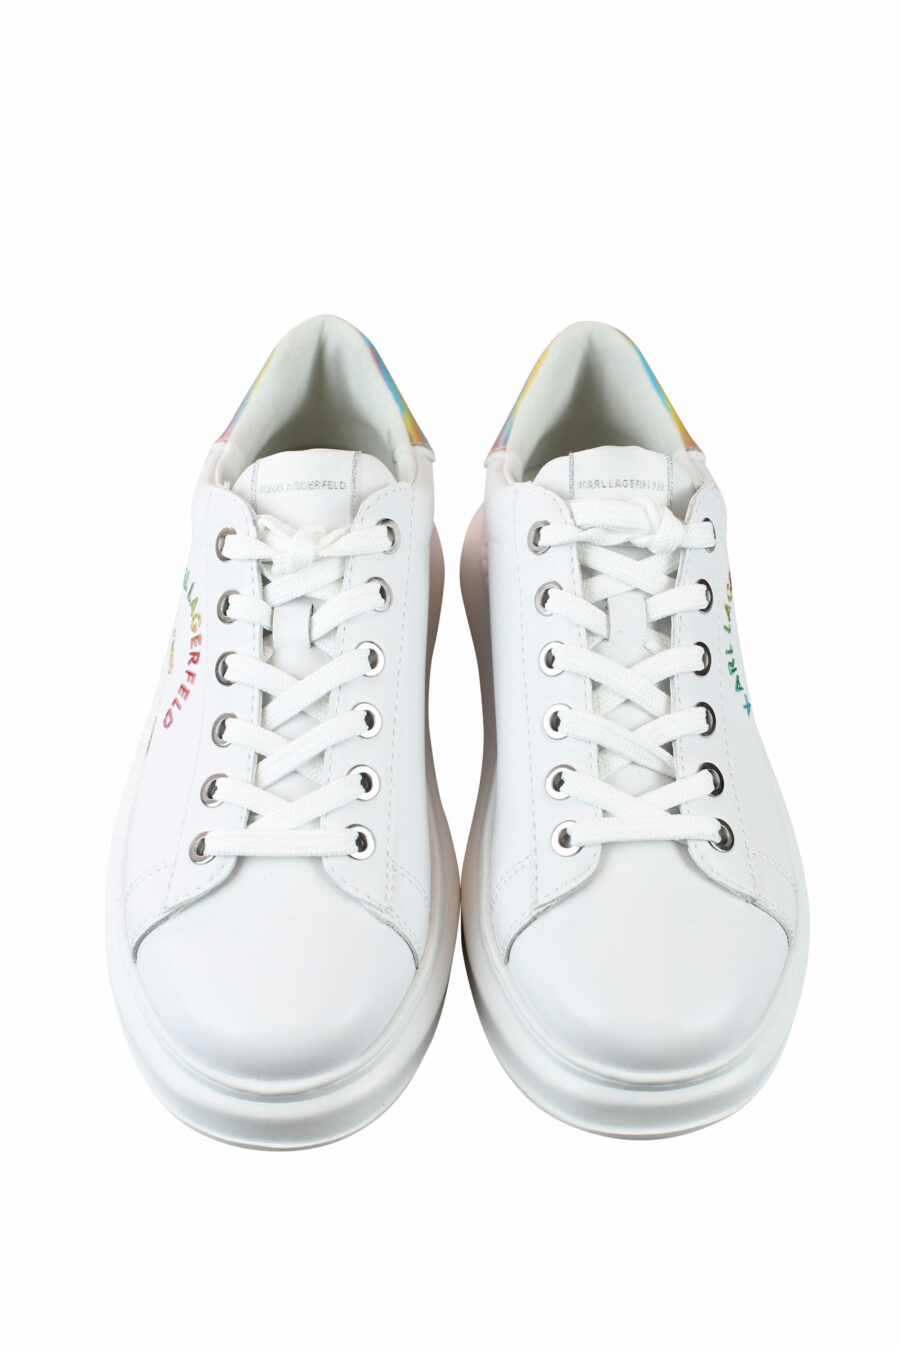 Zapatillas blancas con logo multicolor "rue st-guillaume" - IMG 9984